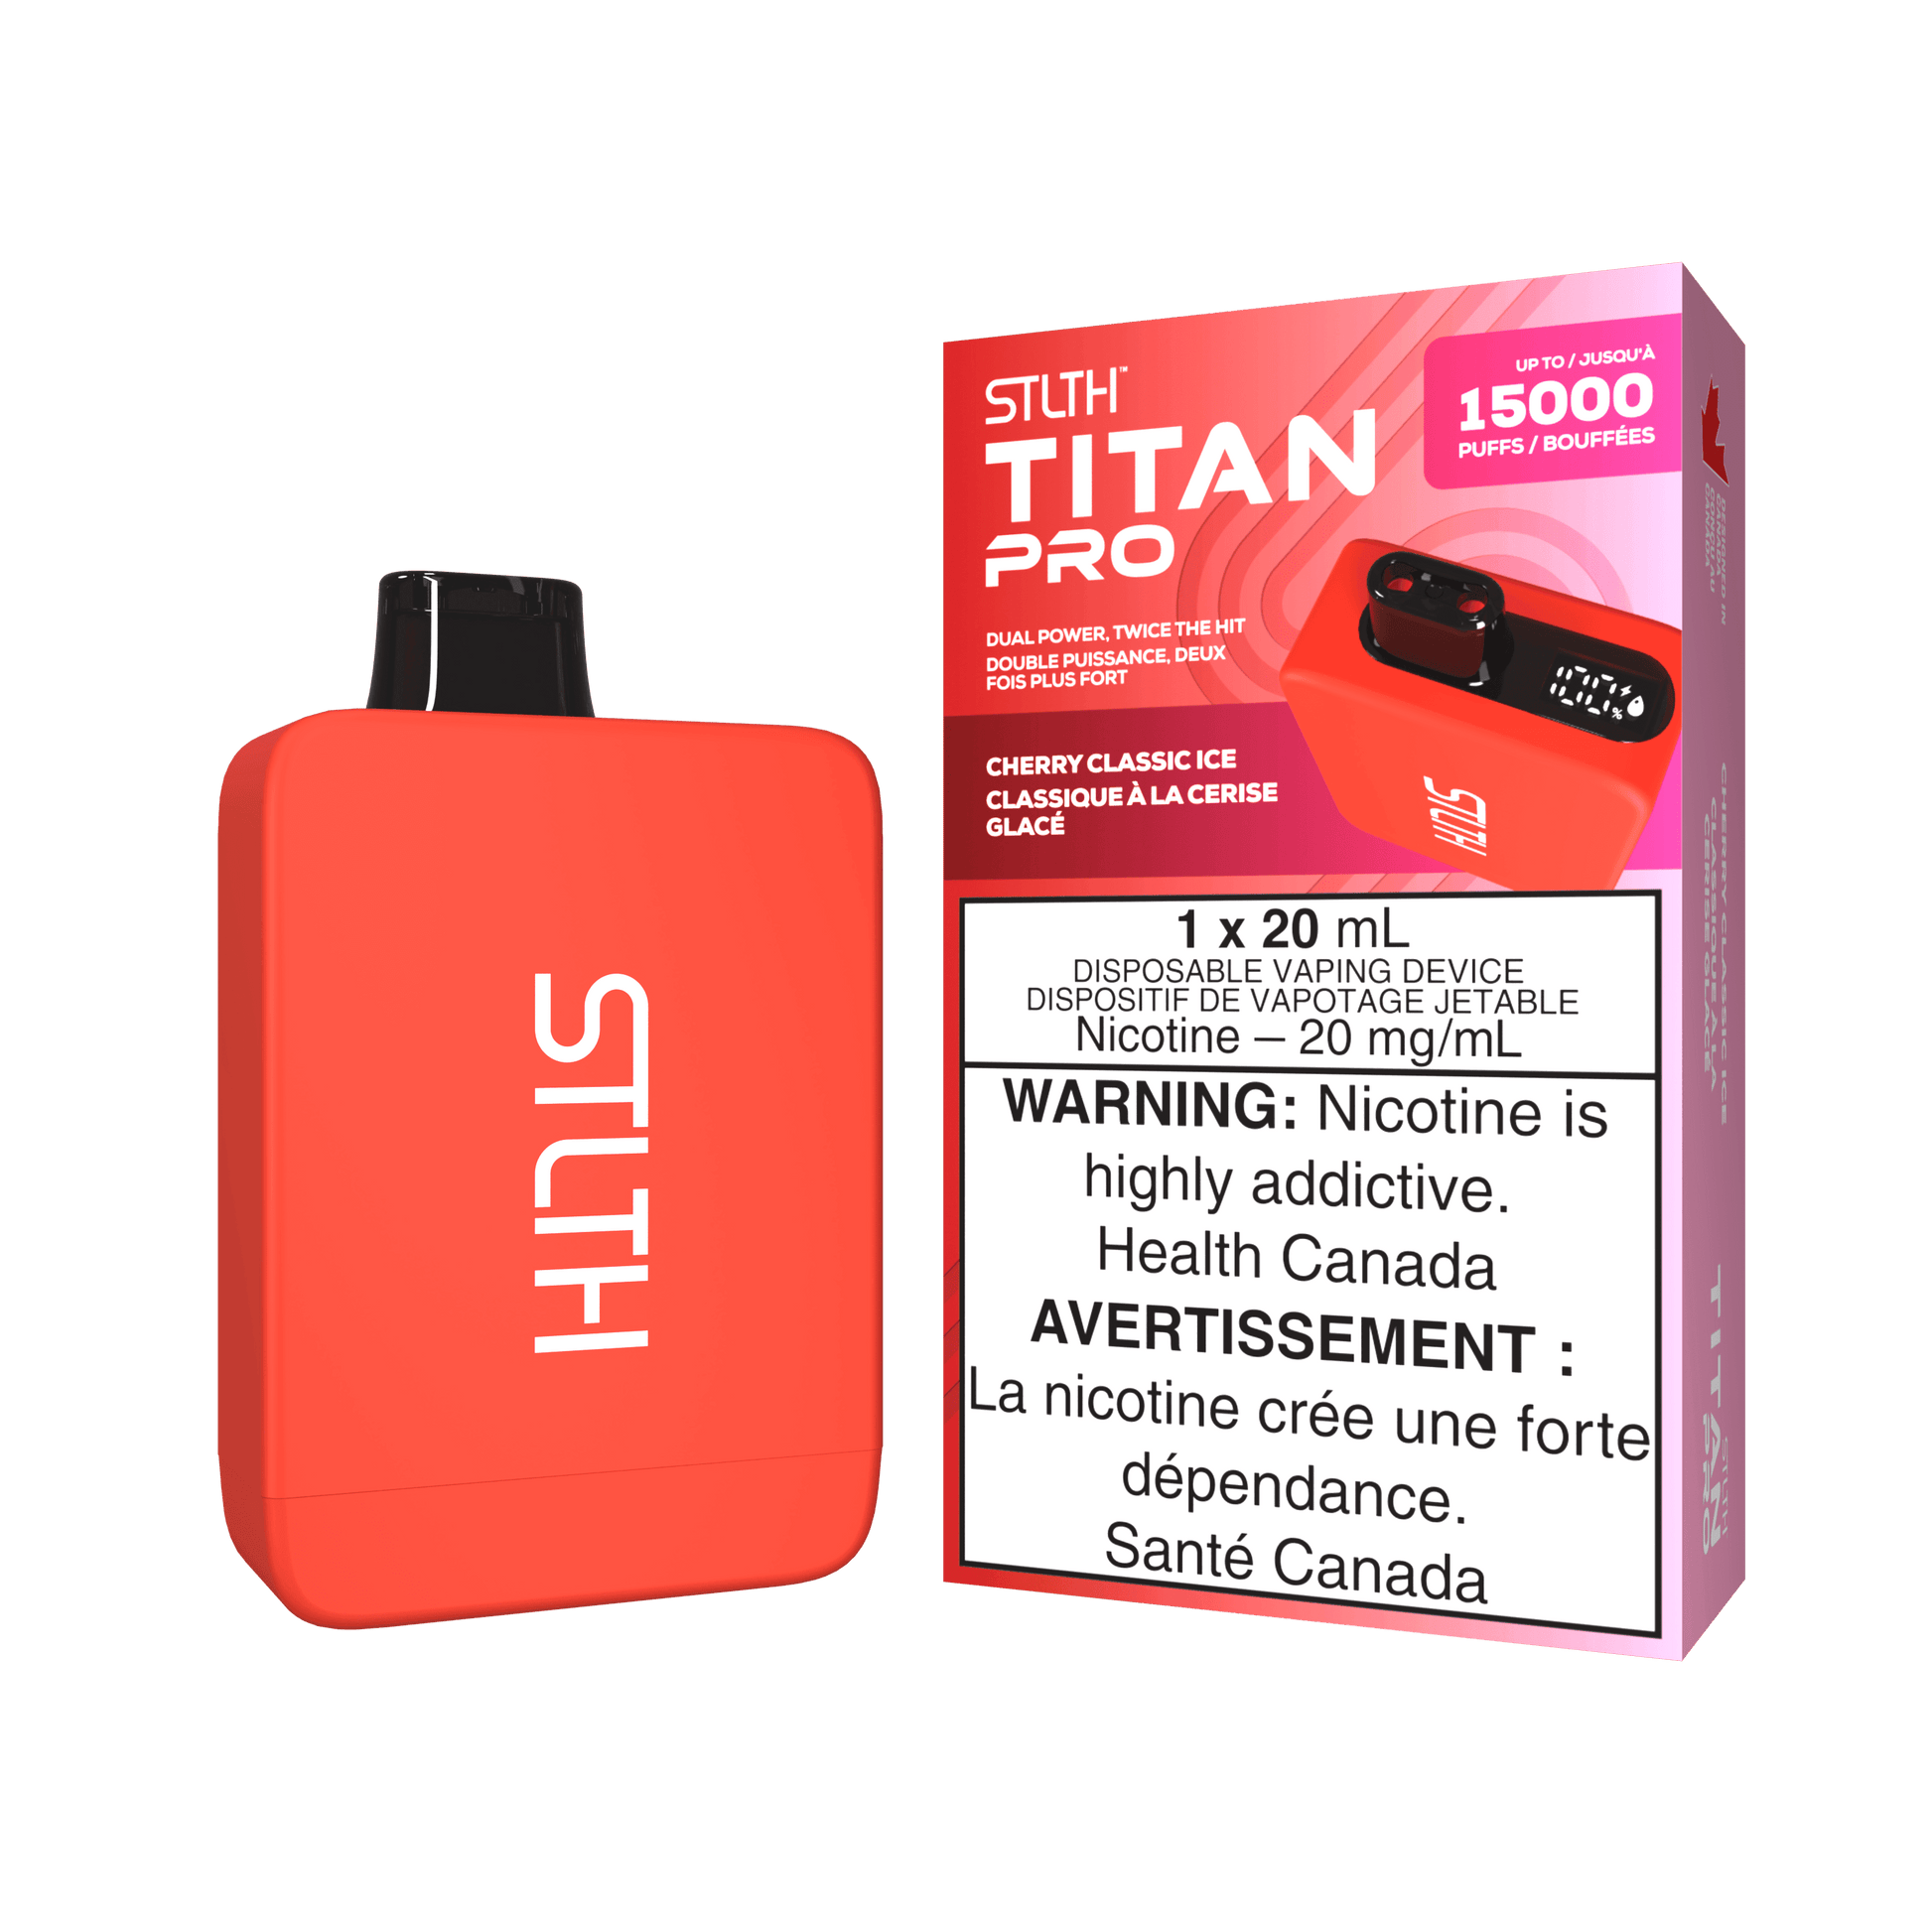 STLTH Titan Pro - Cherry Classic Ice - Vapor Shoppe